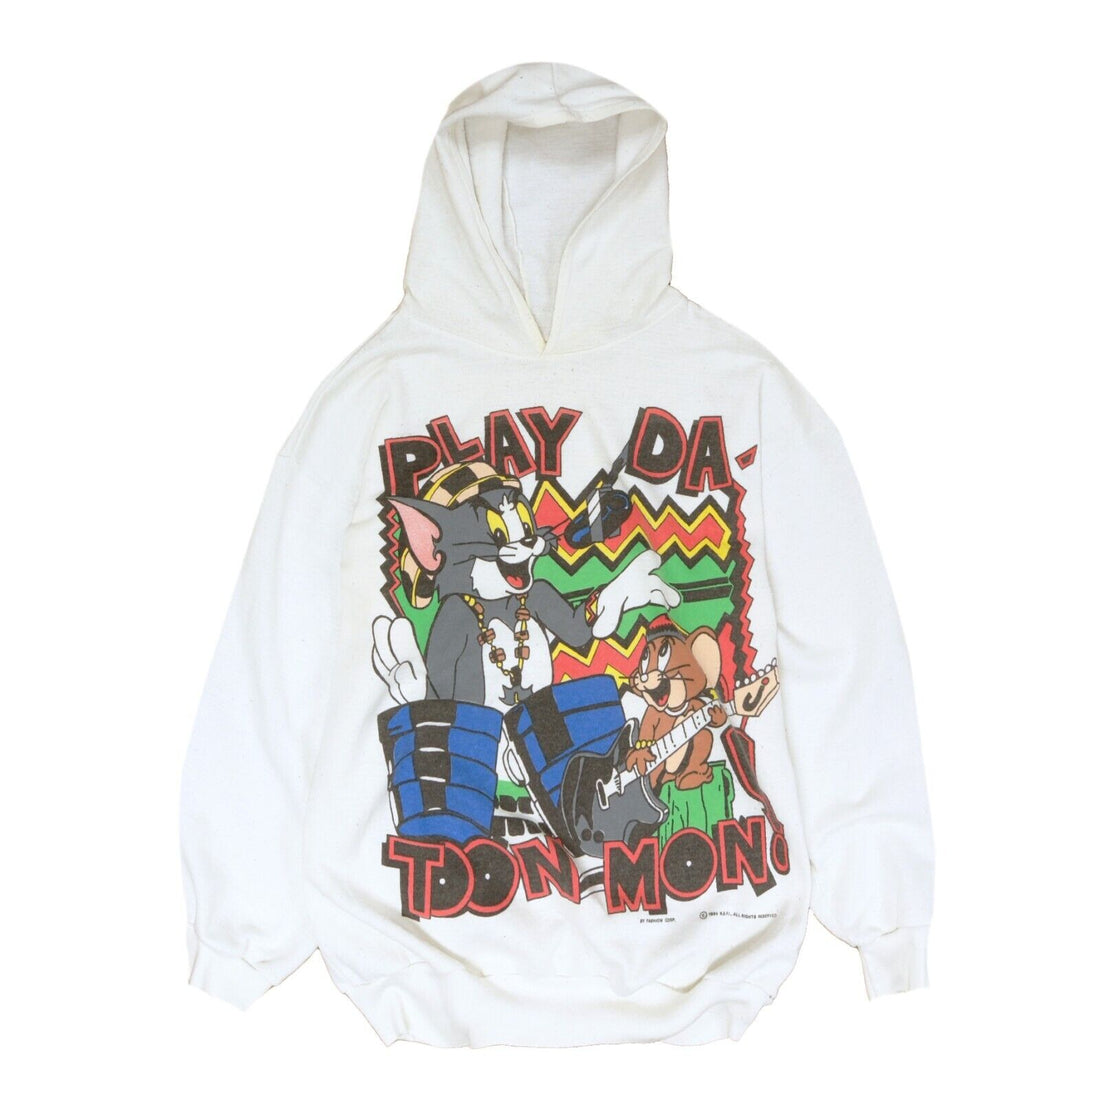 Vintage Tom And Jerry Play Da Toon Sweatshirt Hoodie Size Medium White 90s